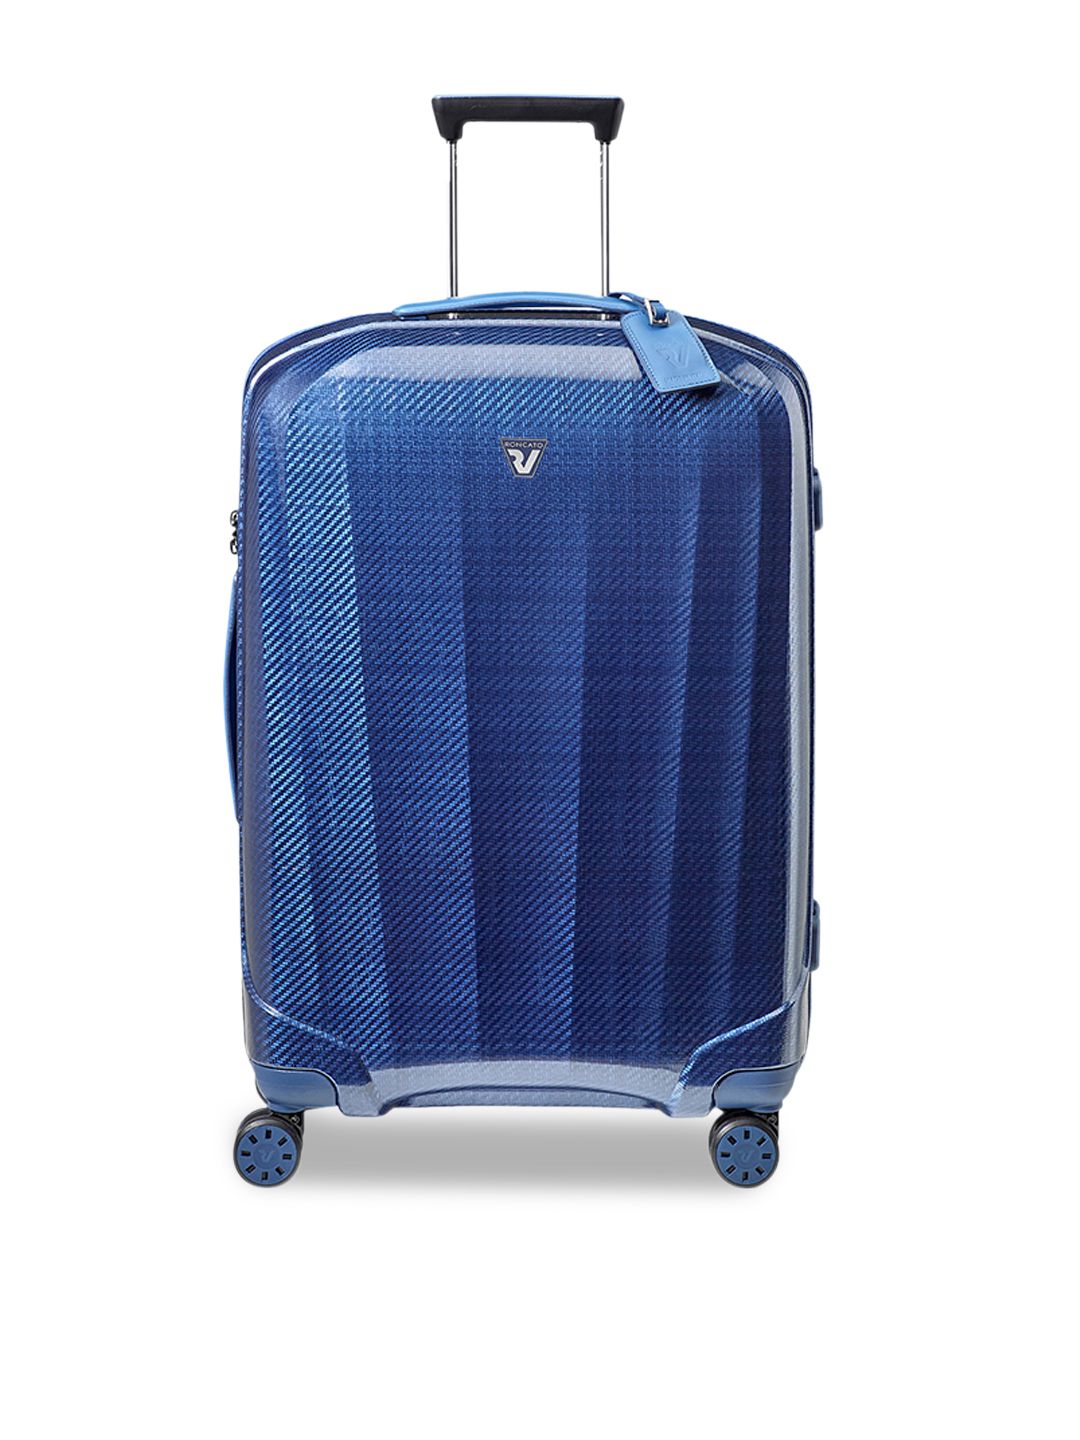 RONCATO WE ARE GLAM Range Blu & Blu Acciaio Color Hard Large Luggage Price in India